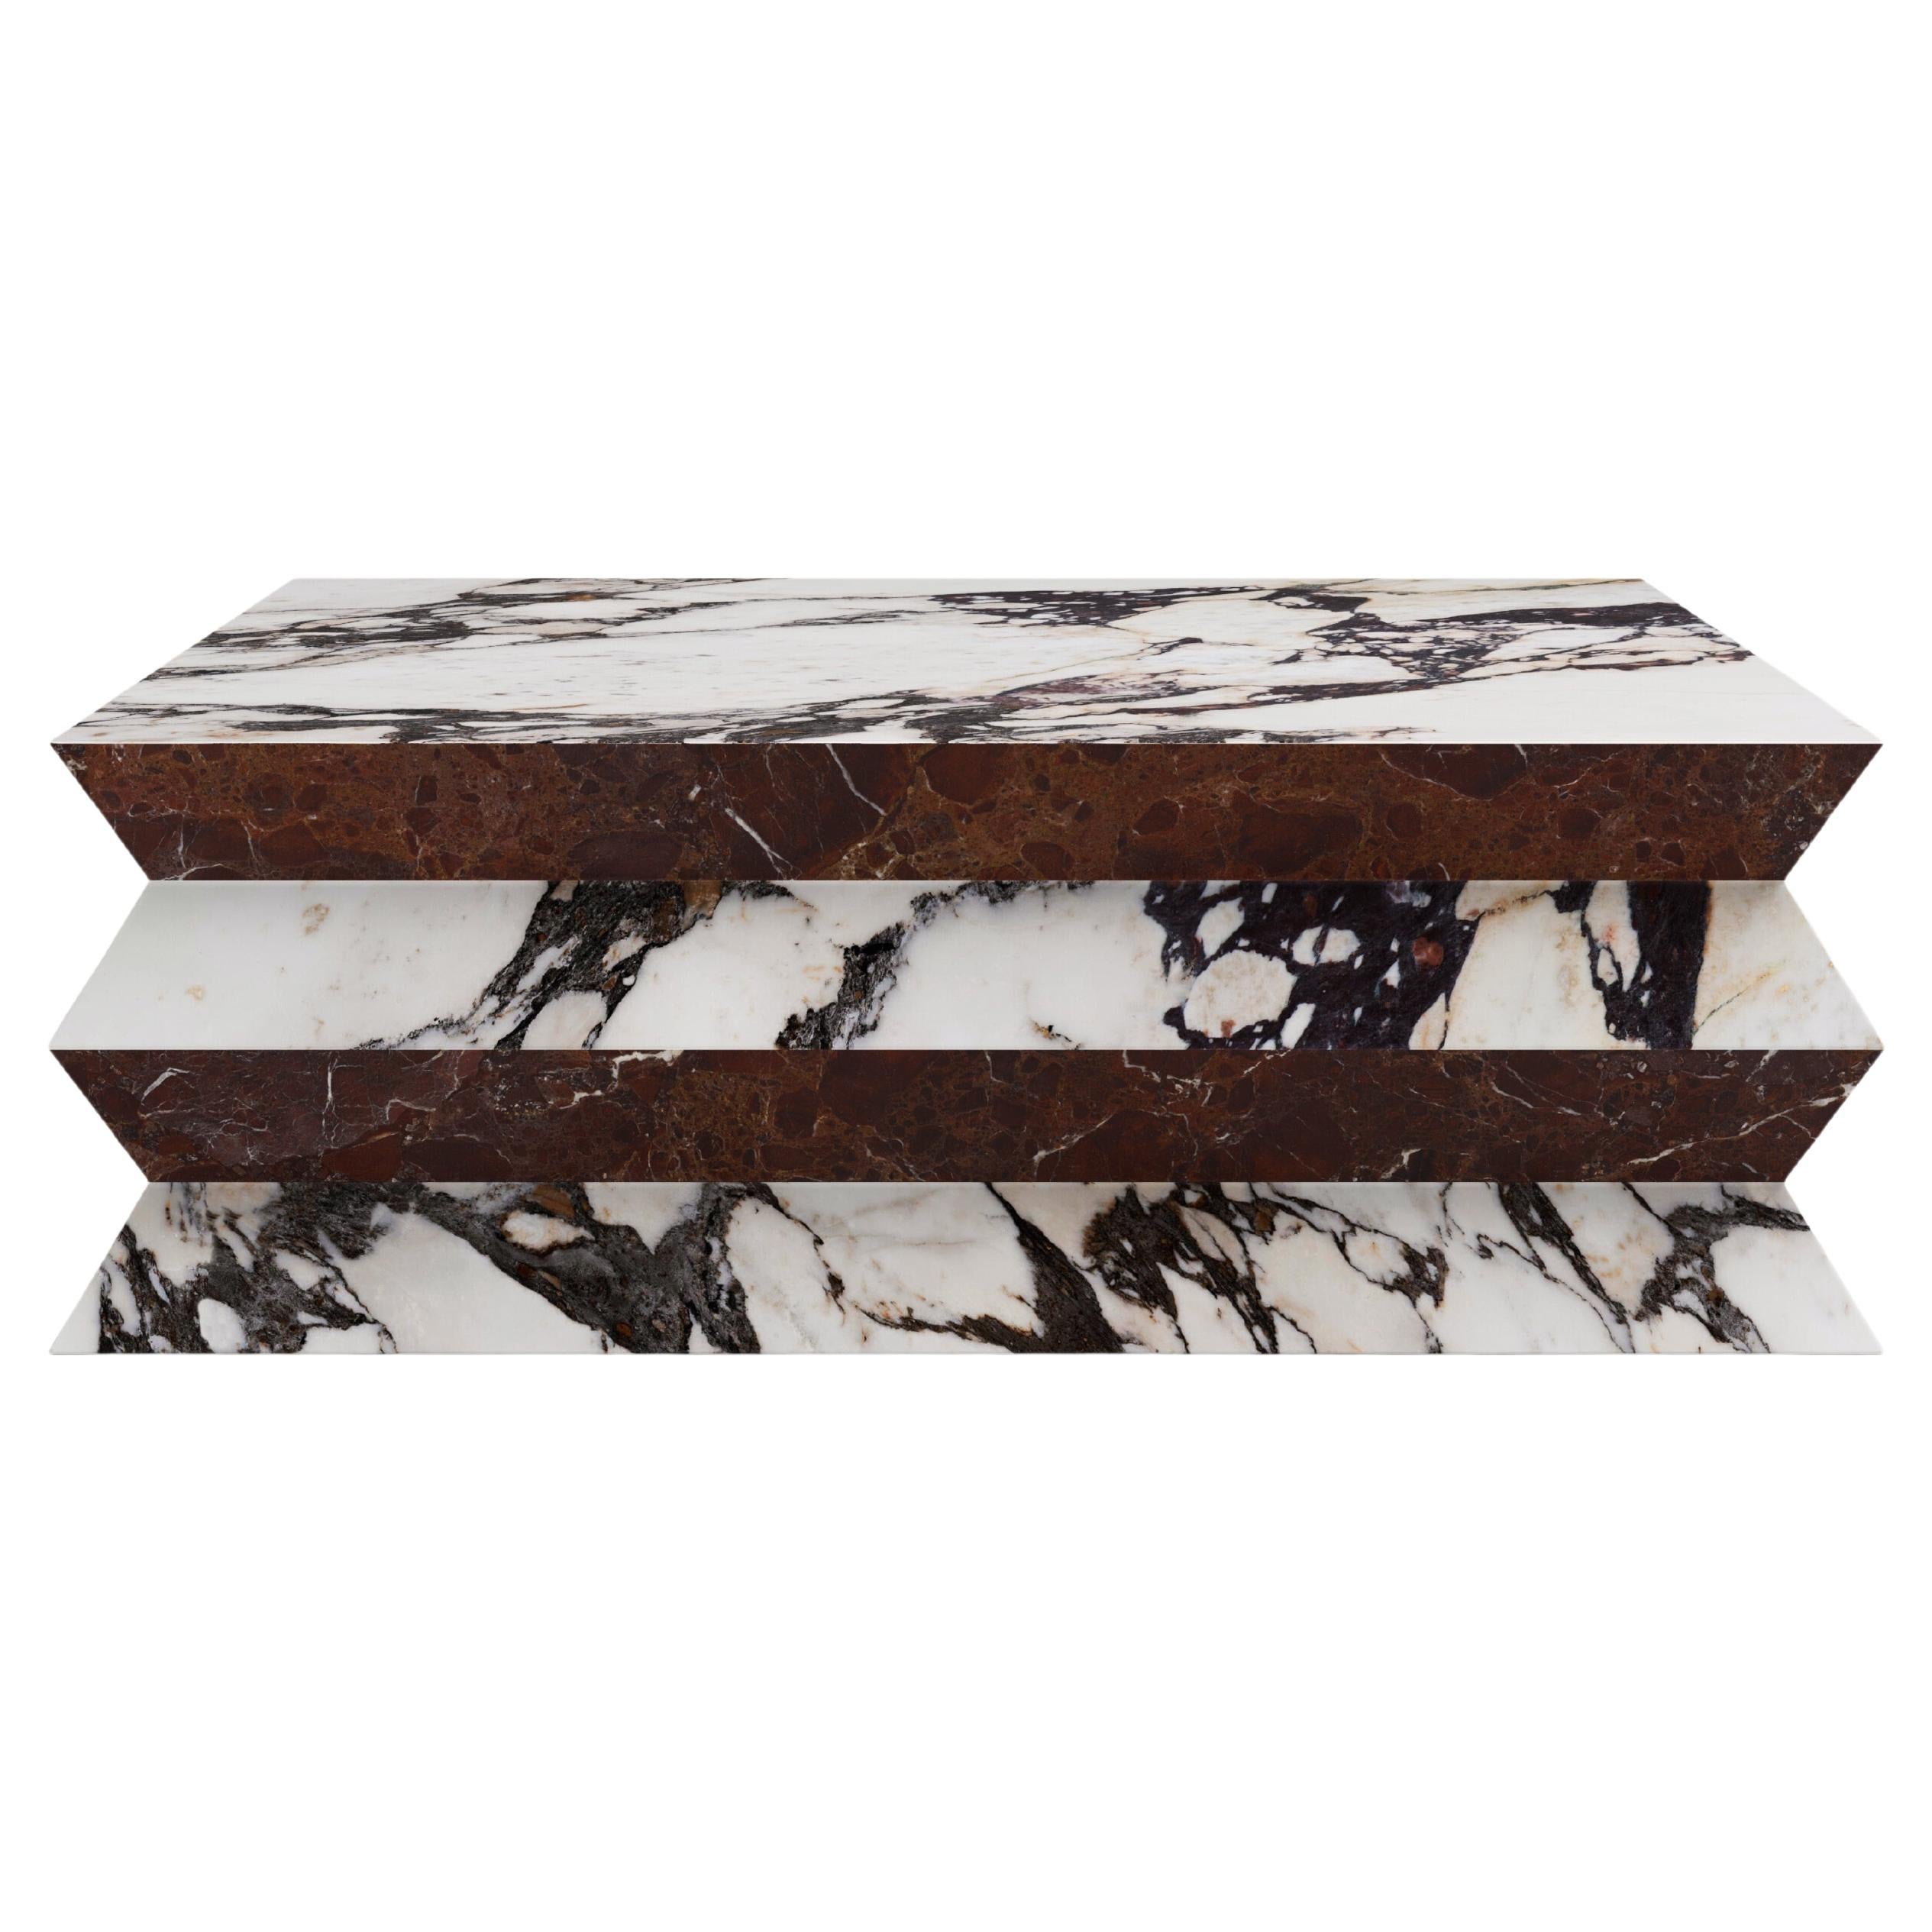 FORM(LA) table basse carrée Grinza 42 po. (L) x 42 po. (L) x 16 po. (H) marbre Calacatta Viola en vente